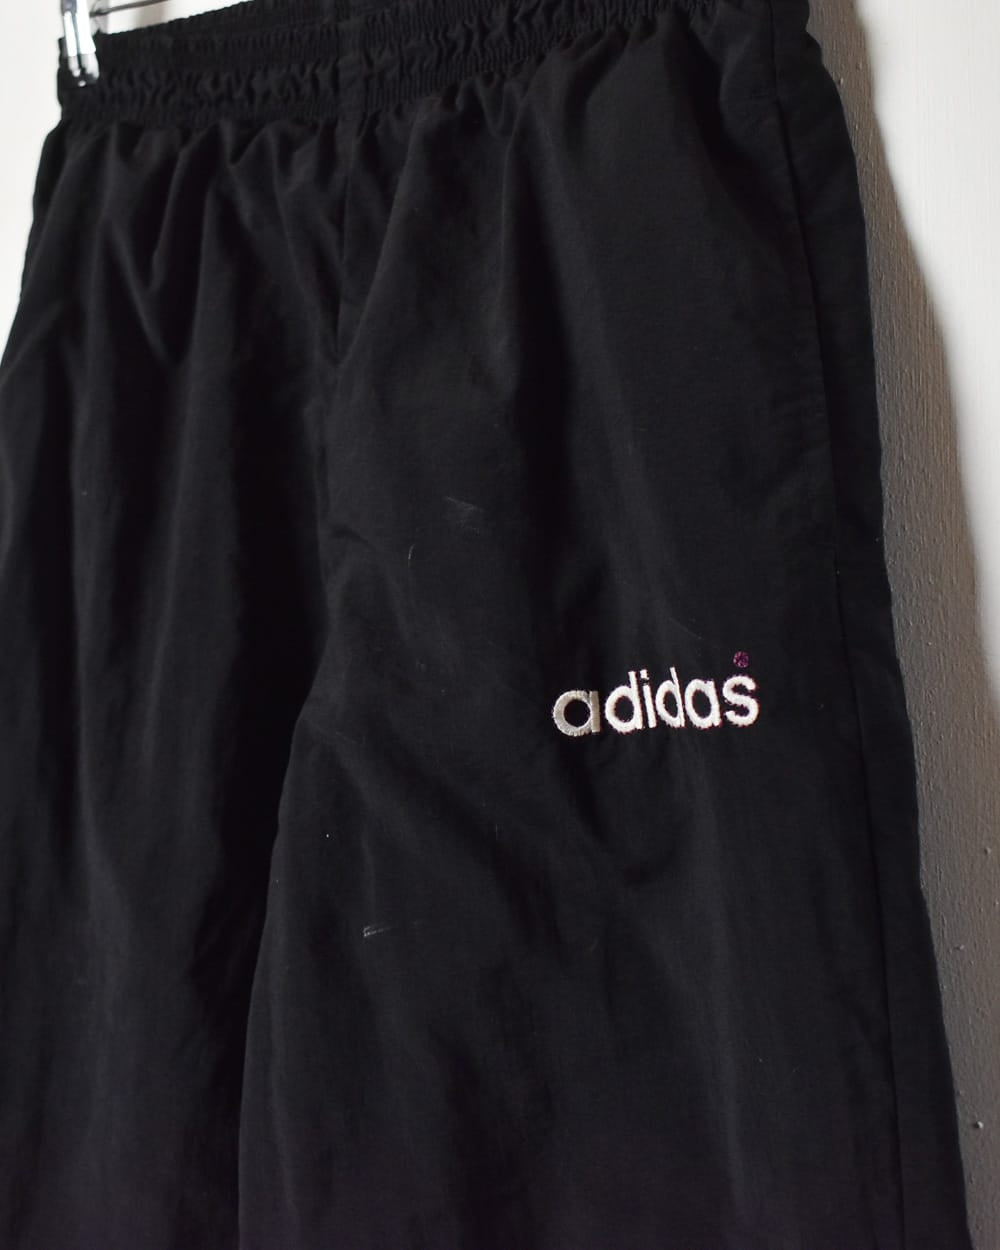 Black Adidas Tracksuit Bottoms - Medium Women's